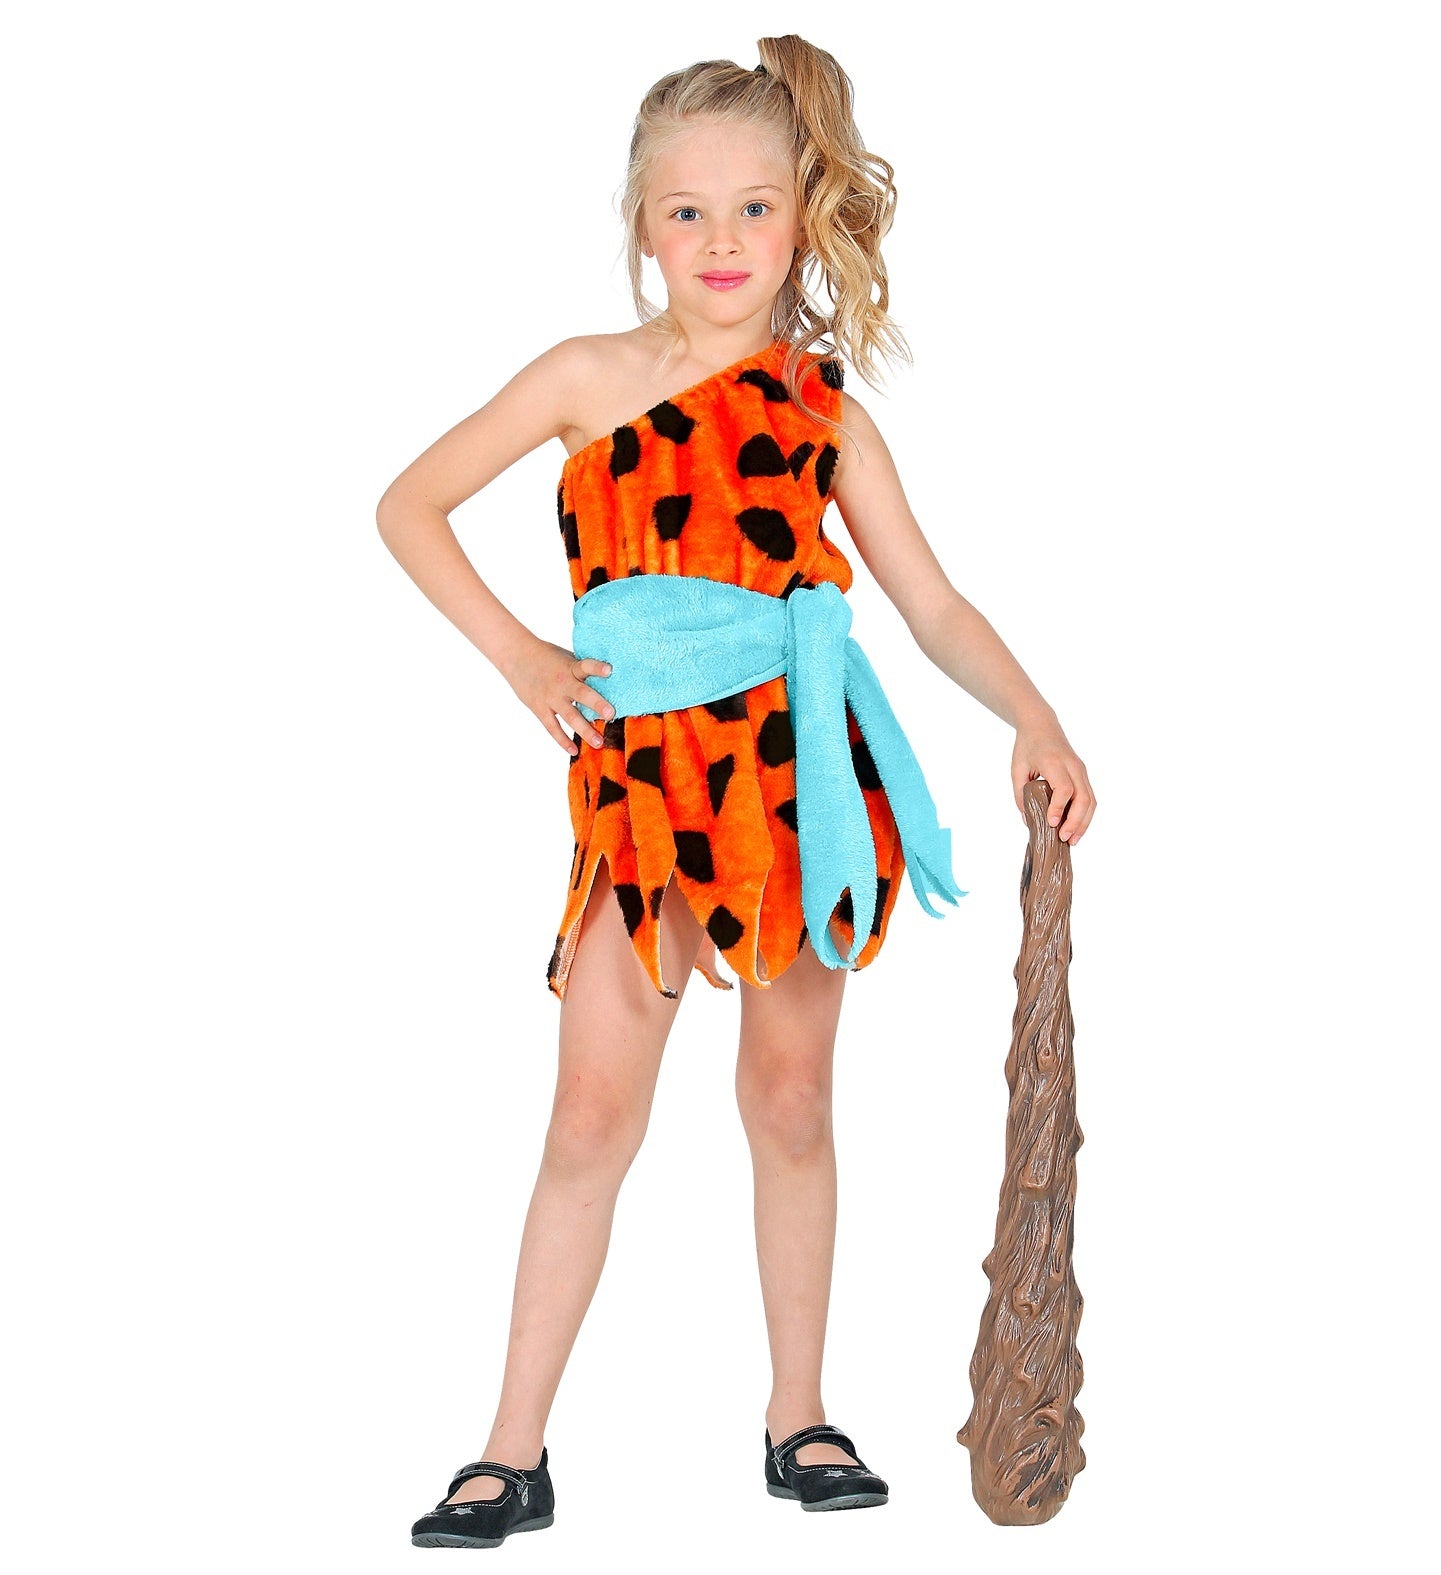 Widmann - The Flintstones Kostuum - Pebbles Flinsteen - Meisje - blauw,oranje - Maat 140 - Carnavalskleding - Verkleedkleding